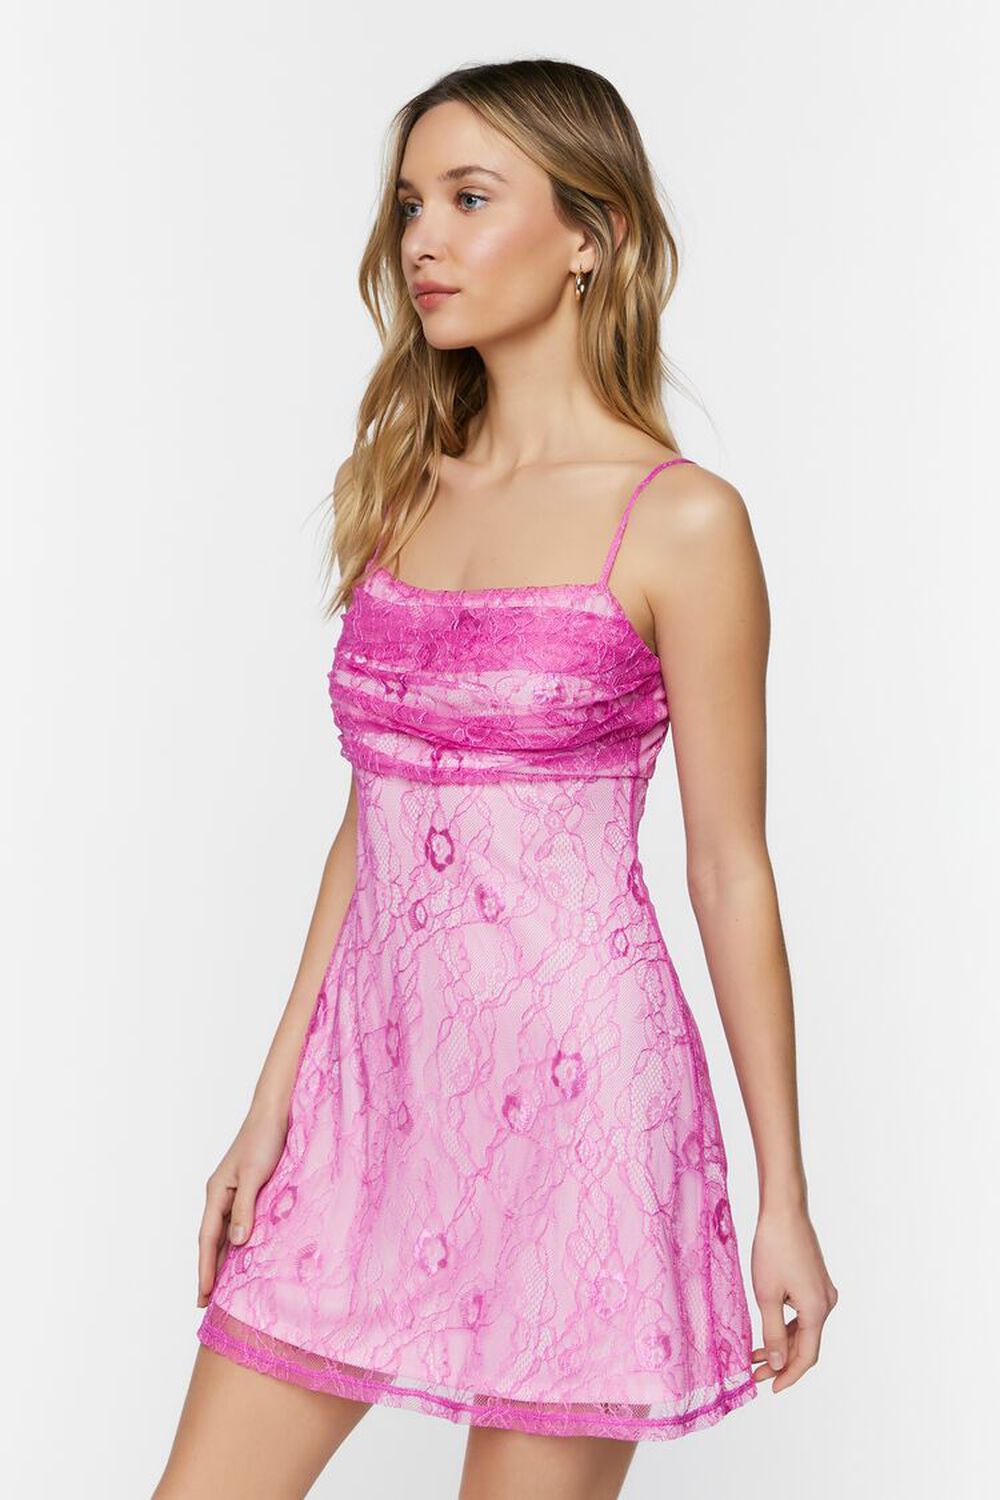 PINK Lace Cami Mini Dress, image 2